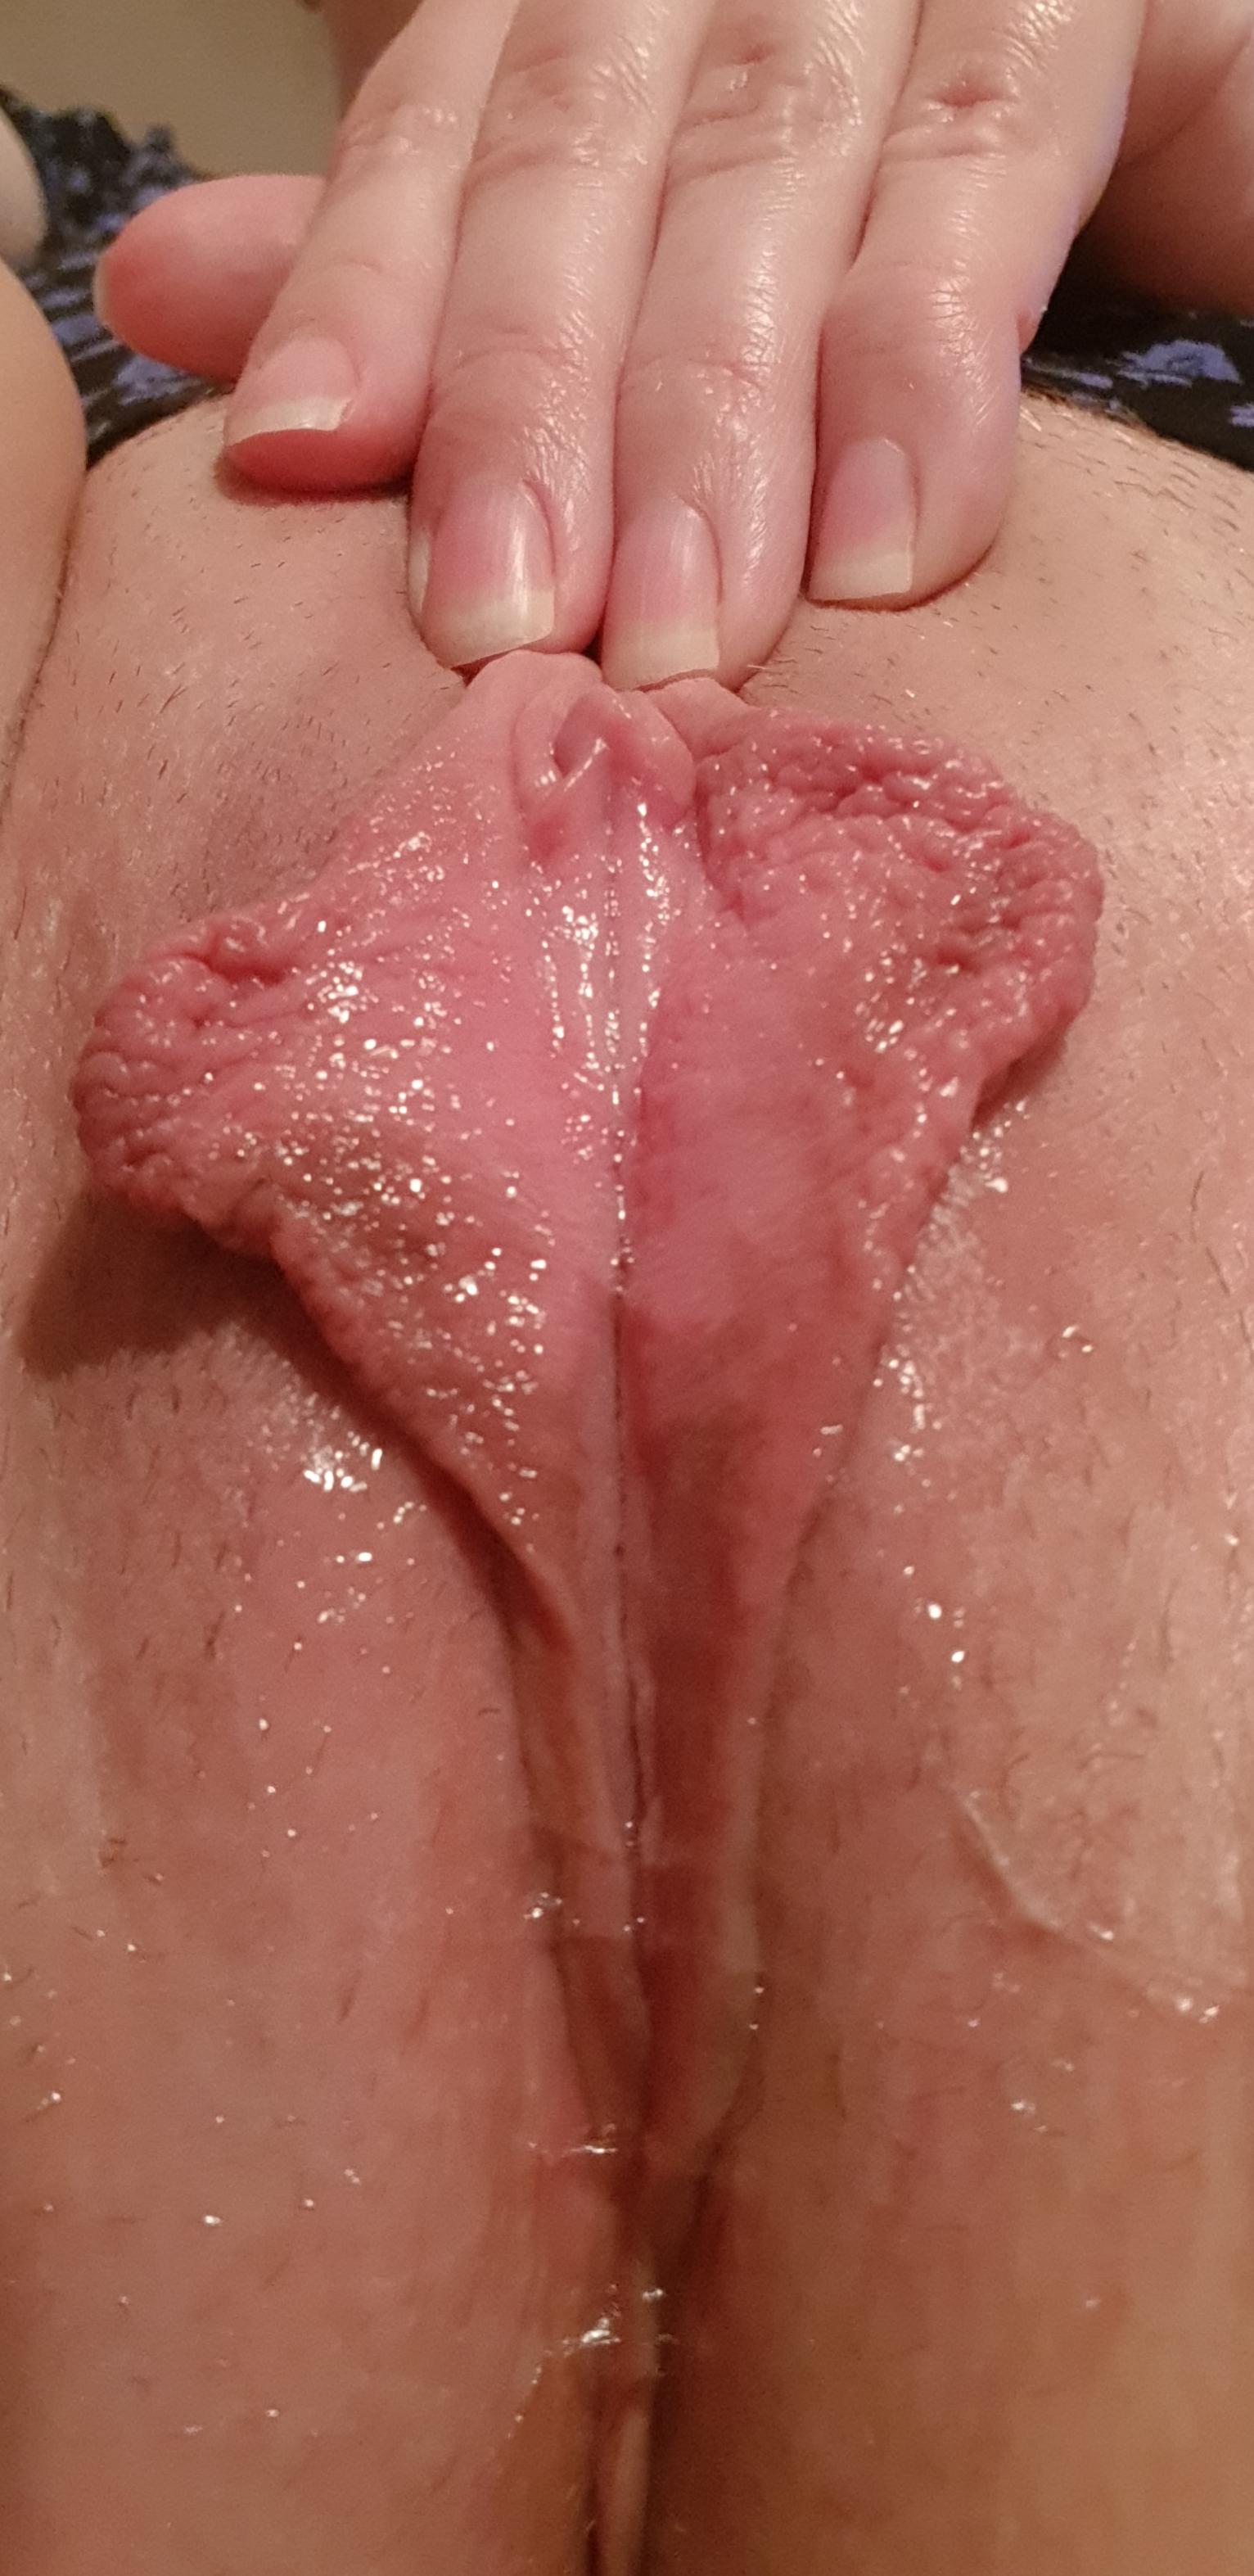 Do you like really wet pussy lips image